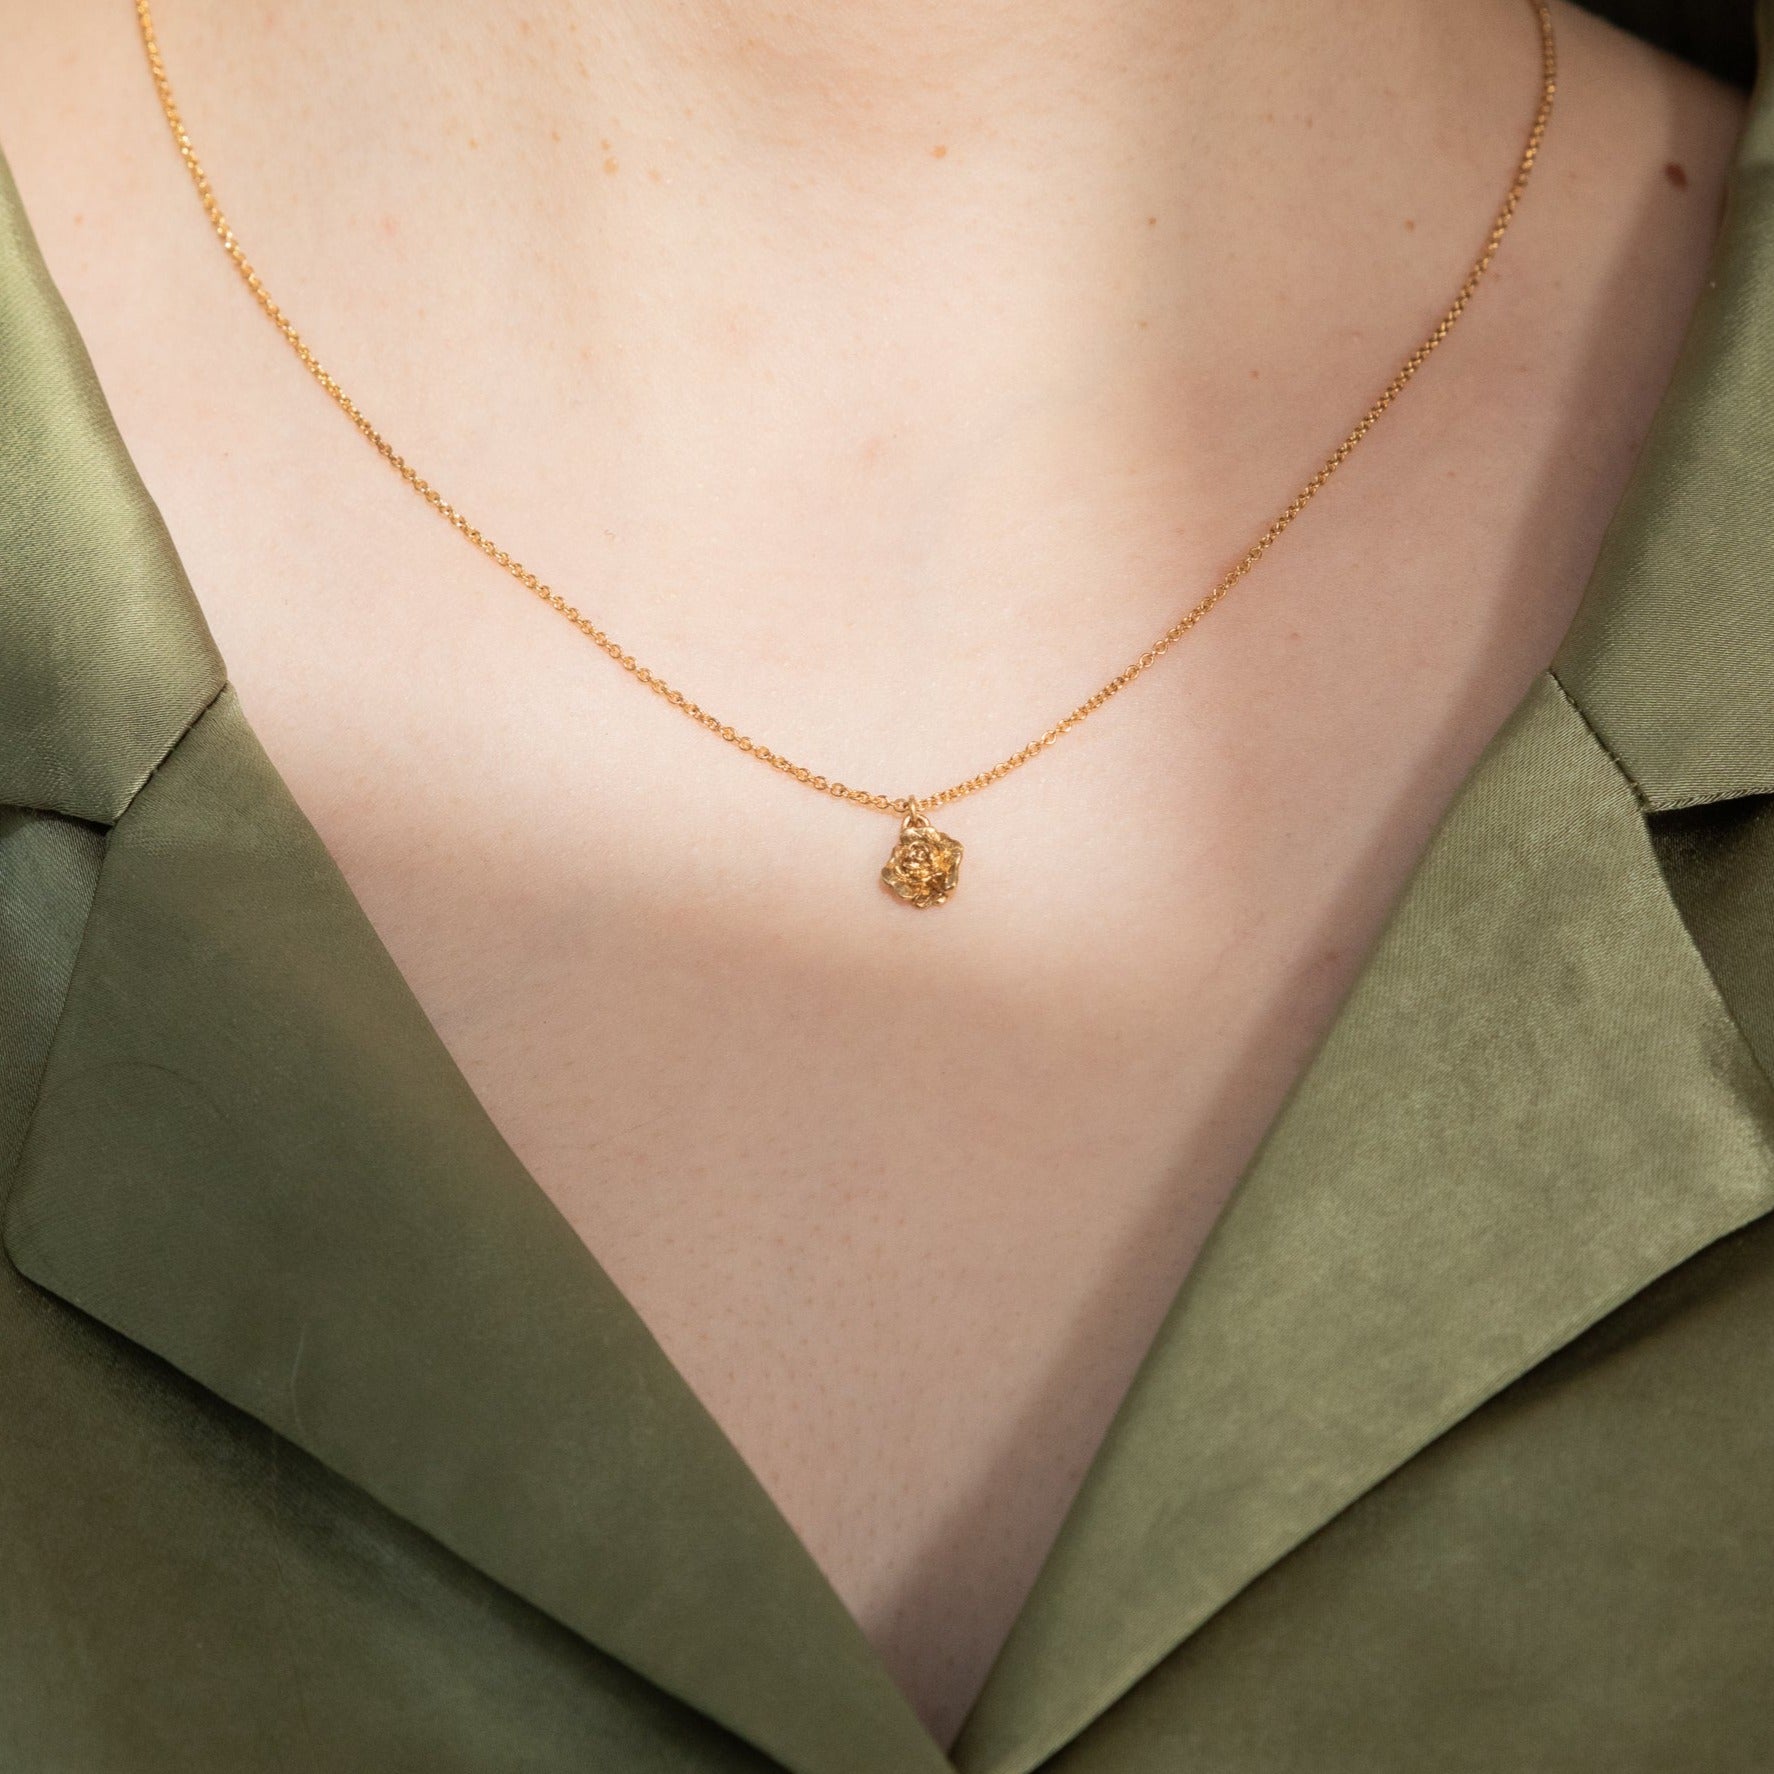 Rosa Damasca Necklace Gold